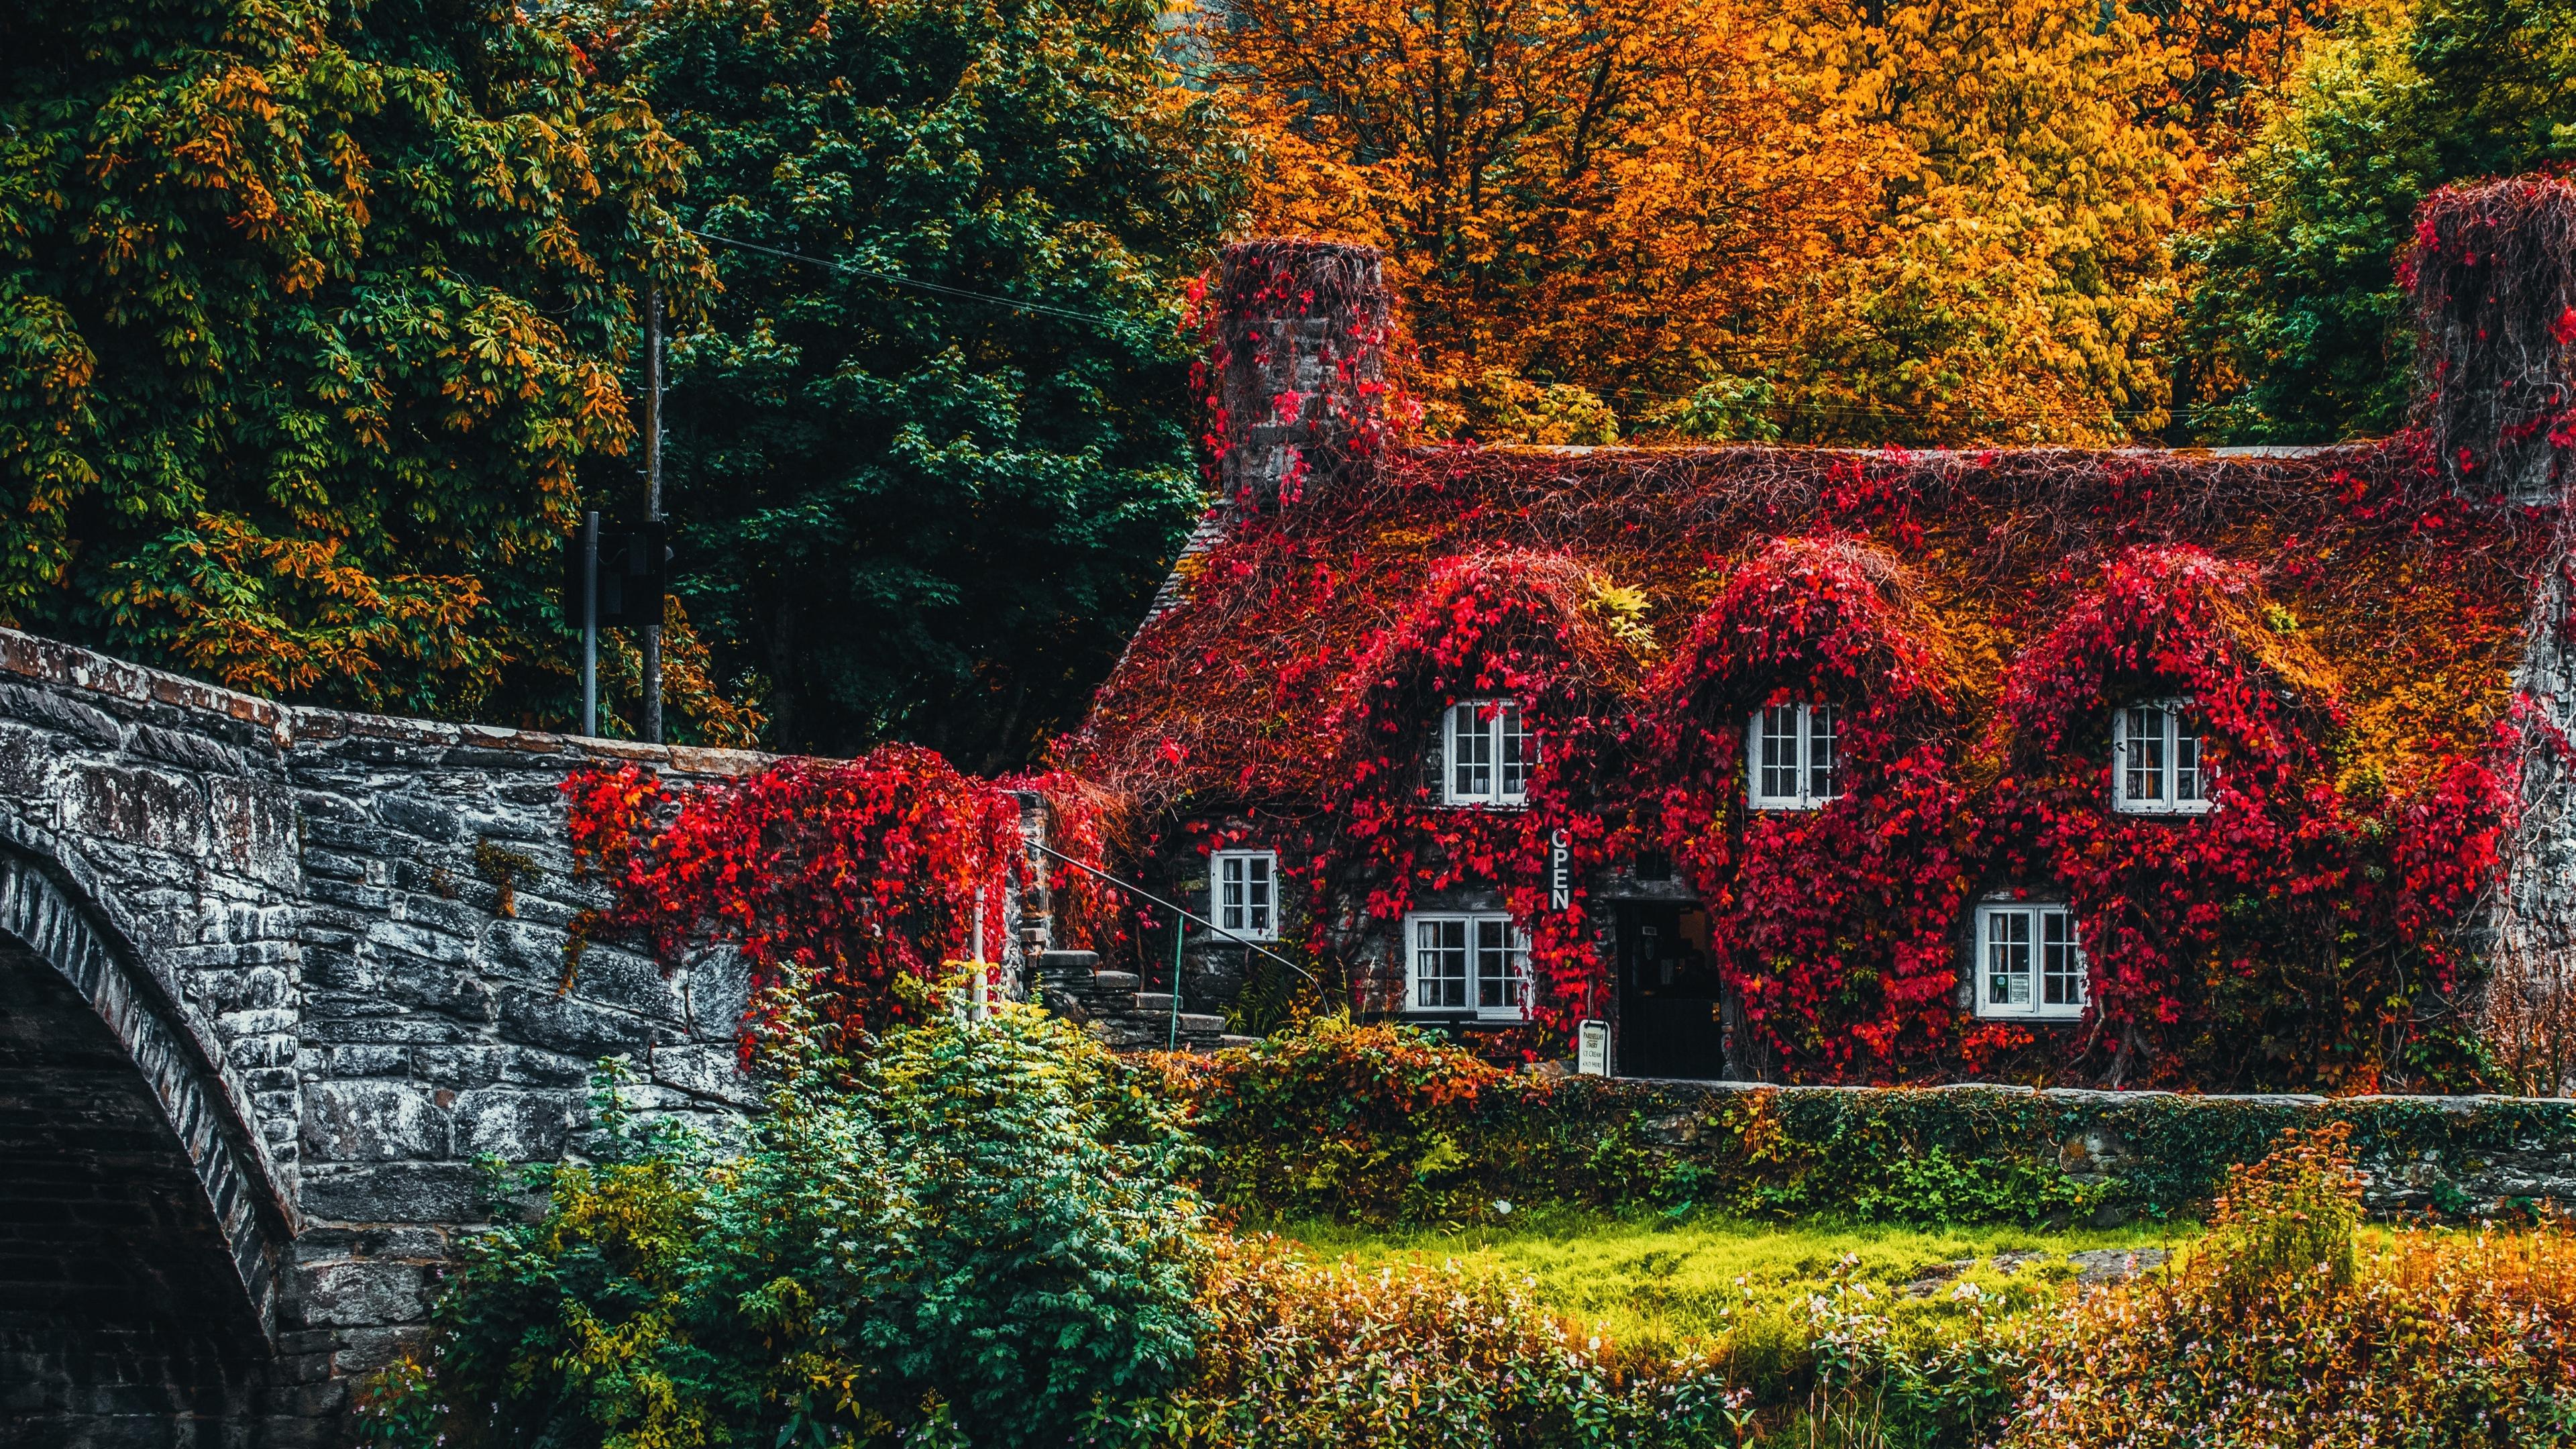 Download wallpaper 3840x2160 house, autumn, river, foliage, autumn